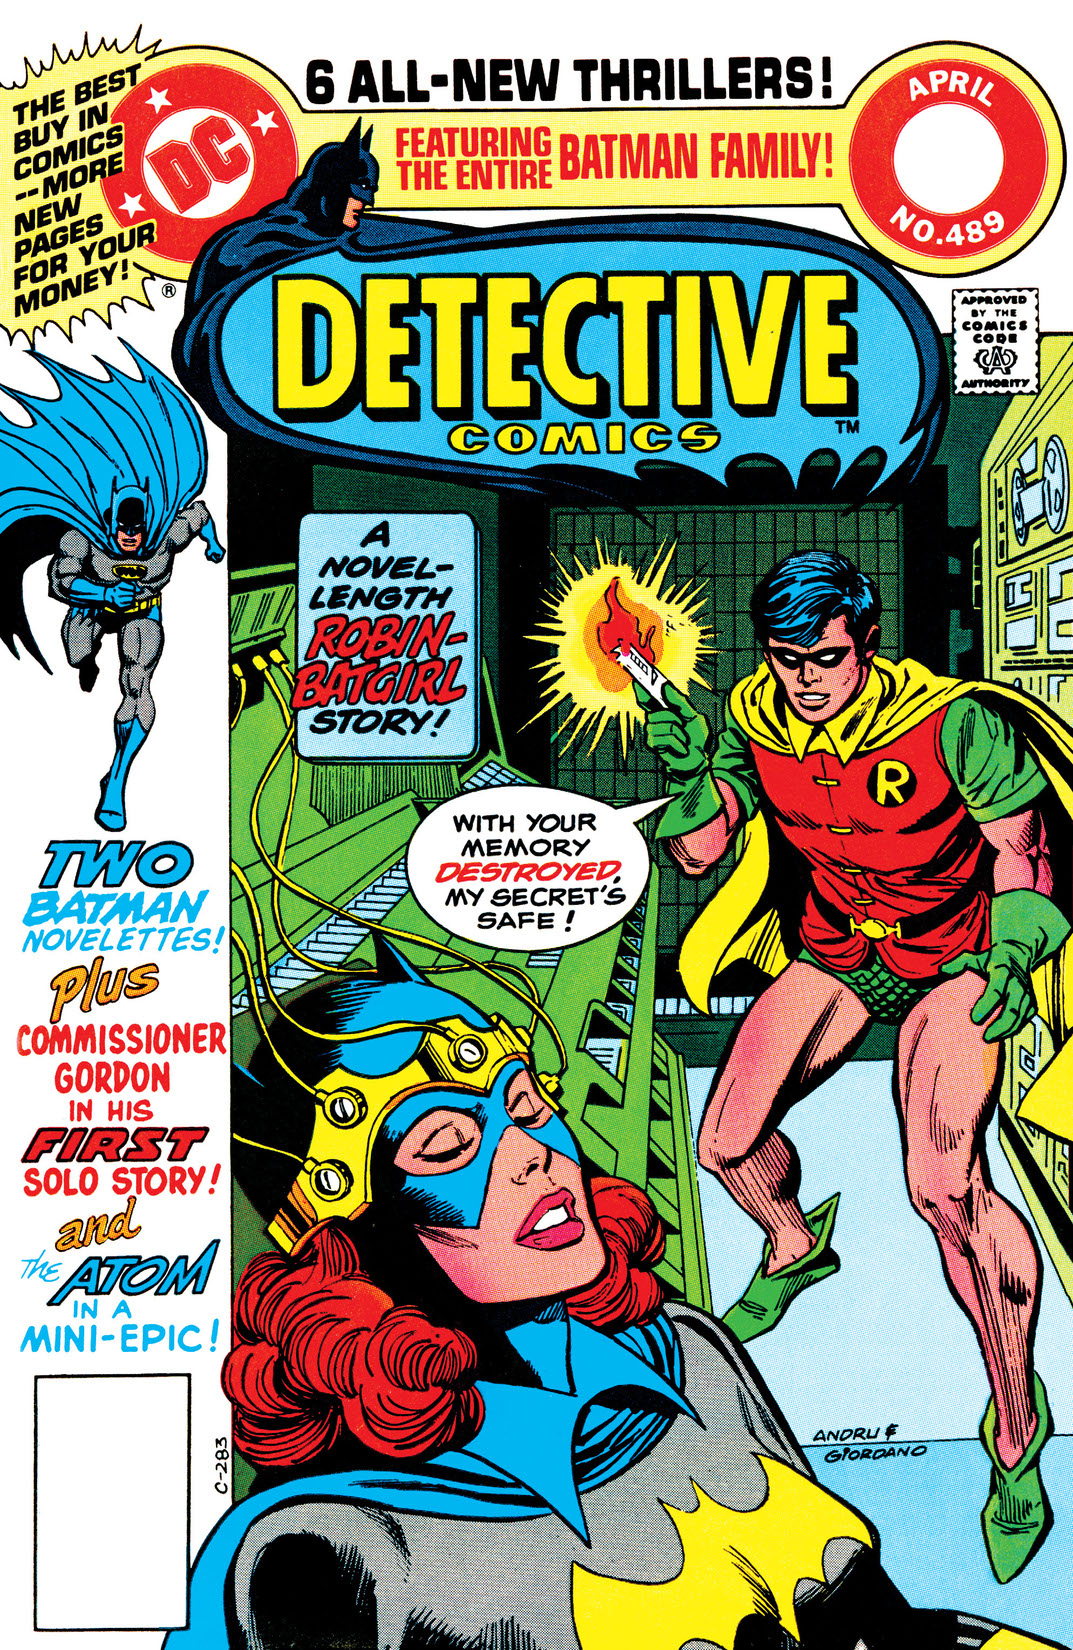 Detective Comics (1937-) #489 preview images